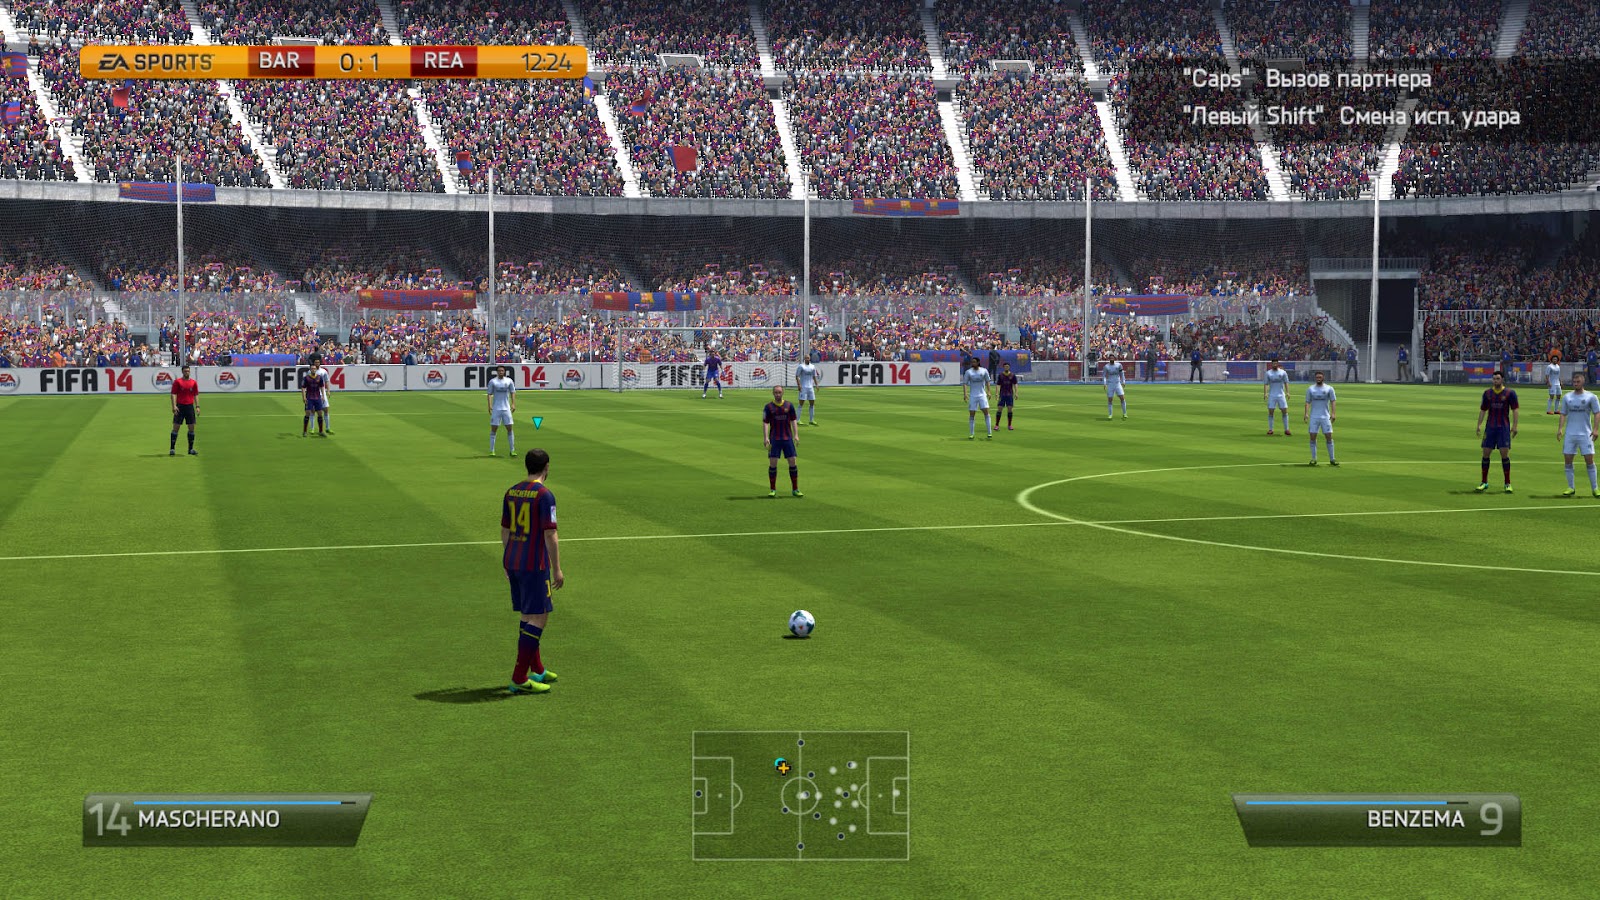 FIFA 14 RePack MULTi13 READNFO-z10yded Cheat Engine